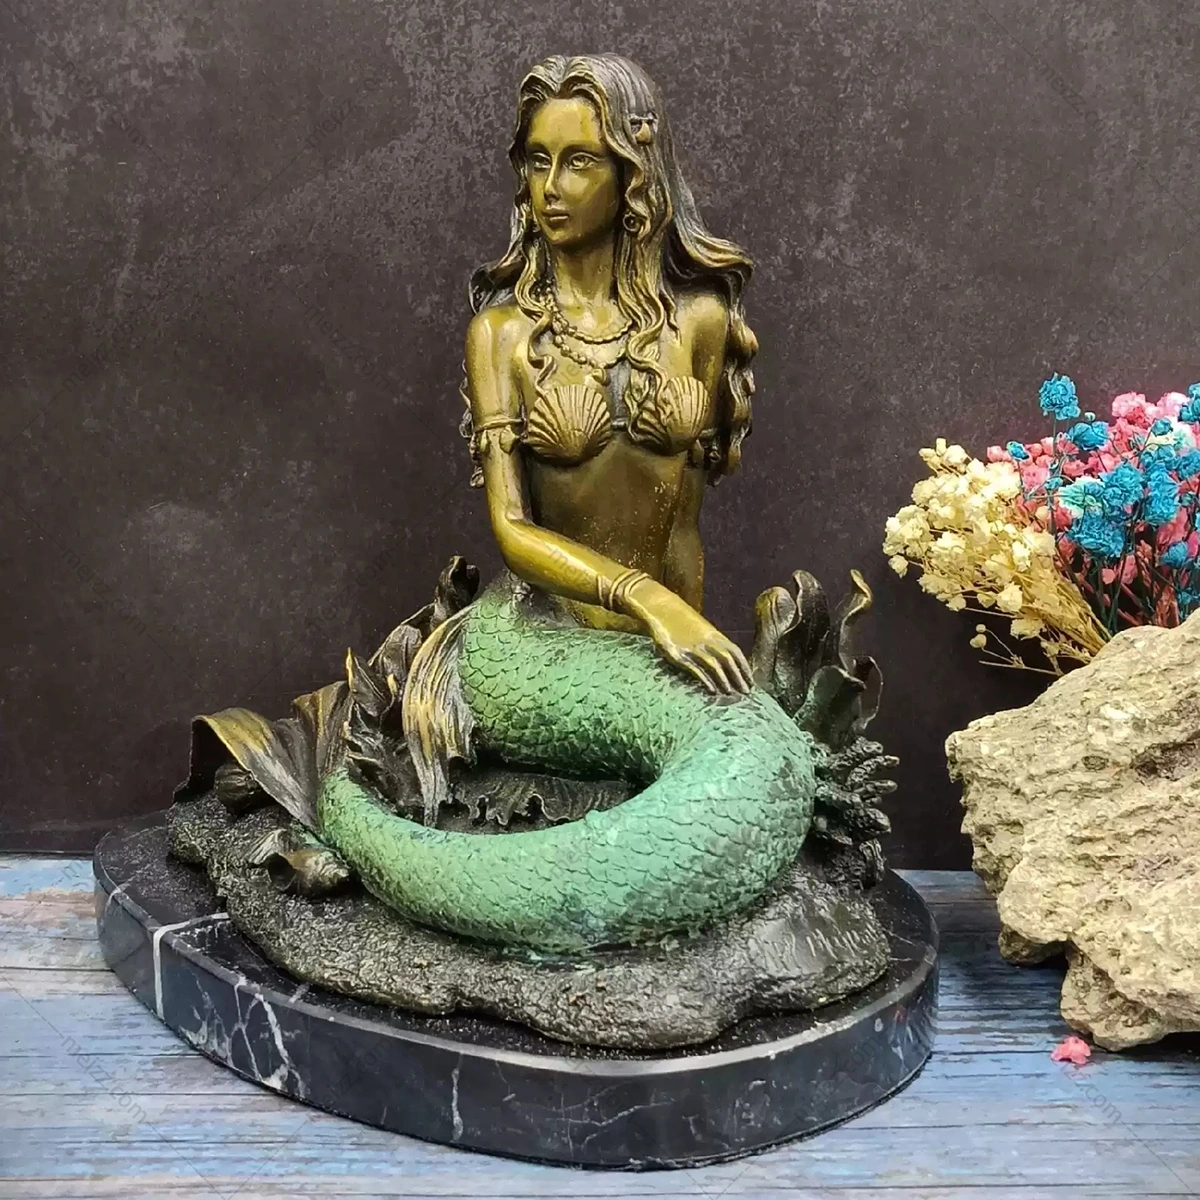 mermaid statues for sale